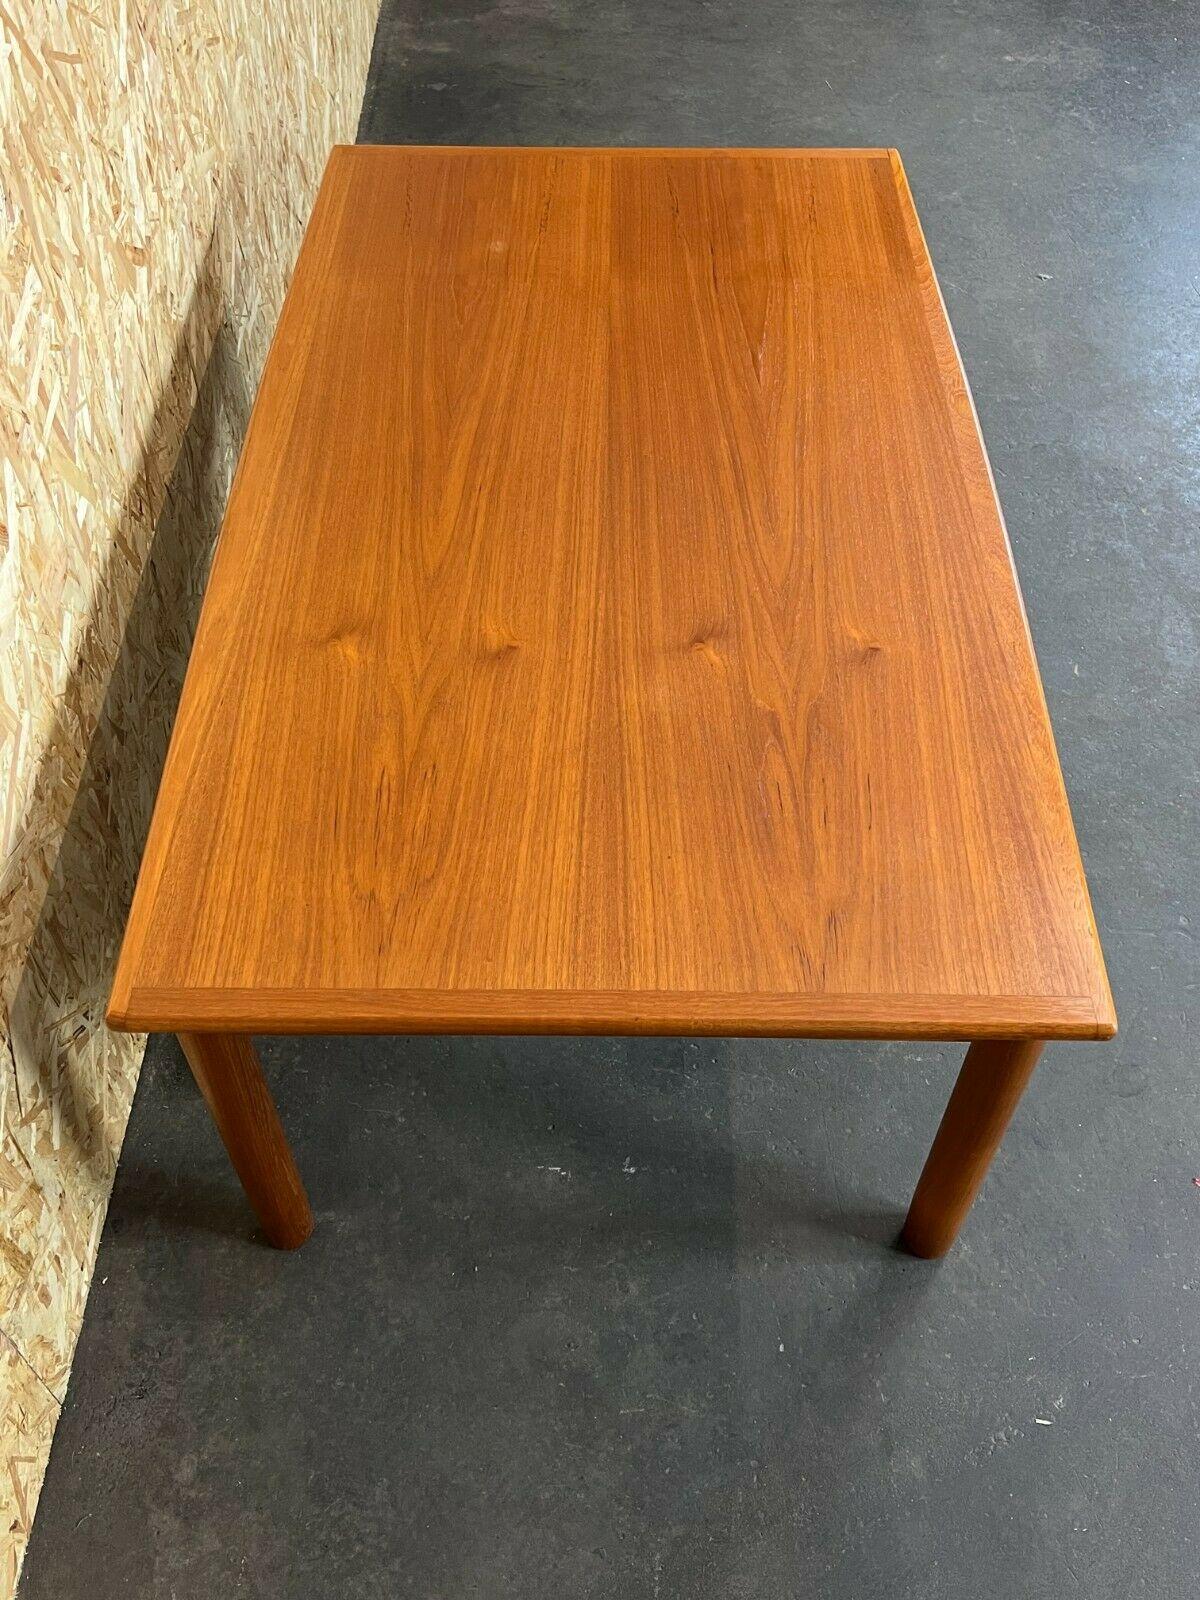 60s 70s Teak Table Coffee Table Danish Modern Design Denmark For Sale 3